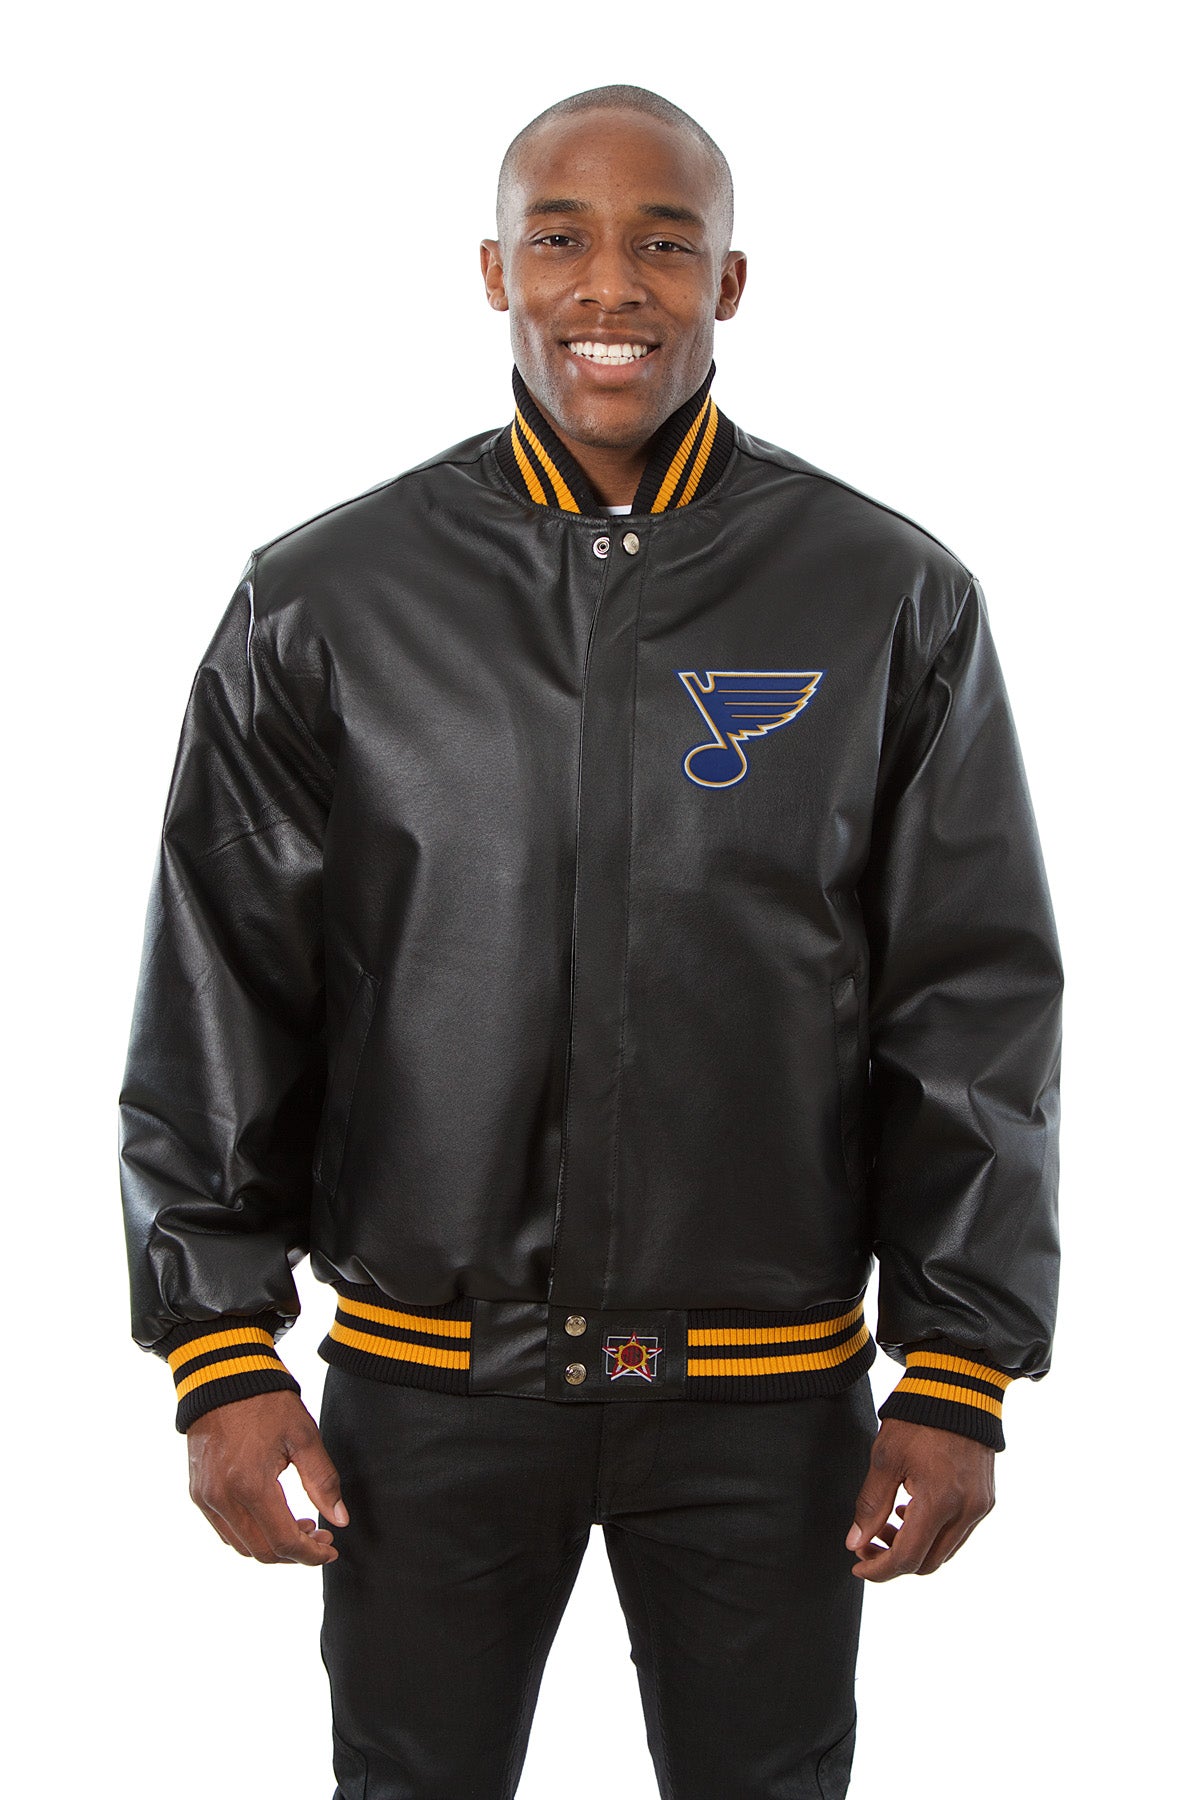 St. Louis Blues Full Leather Jacket